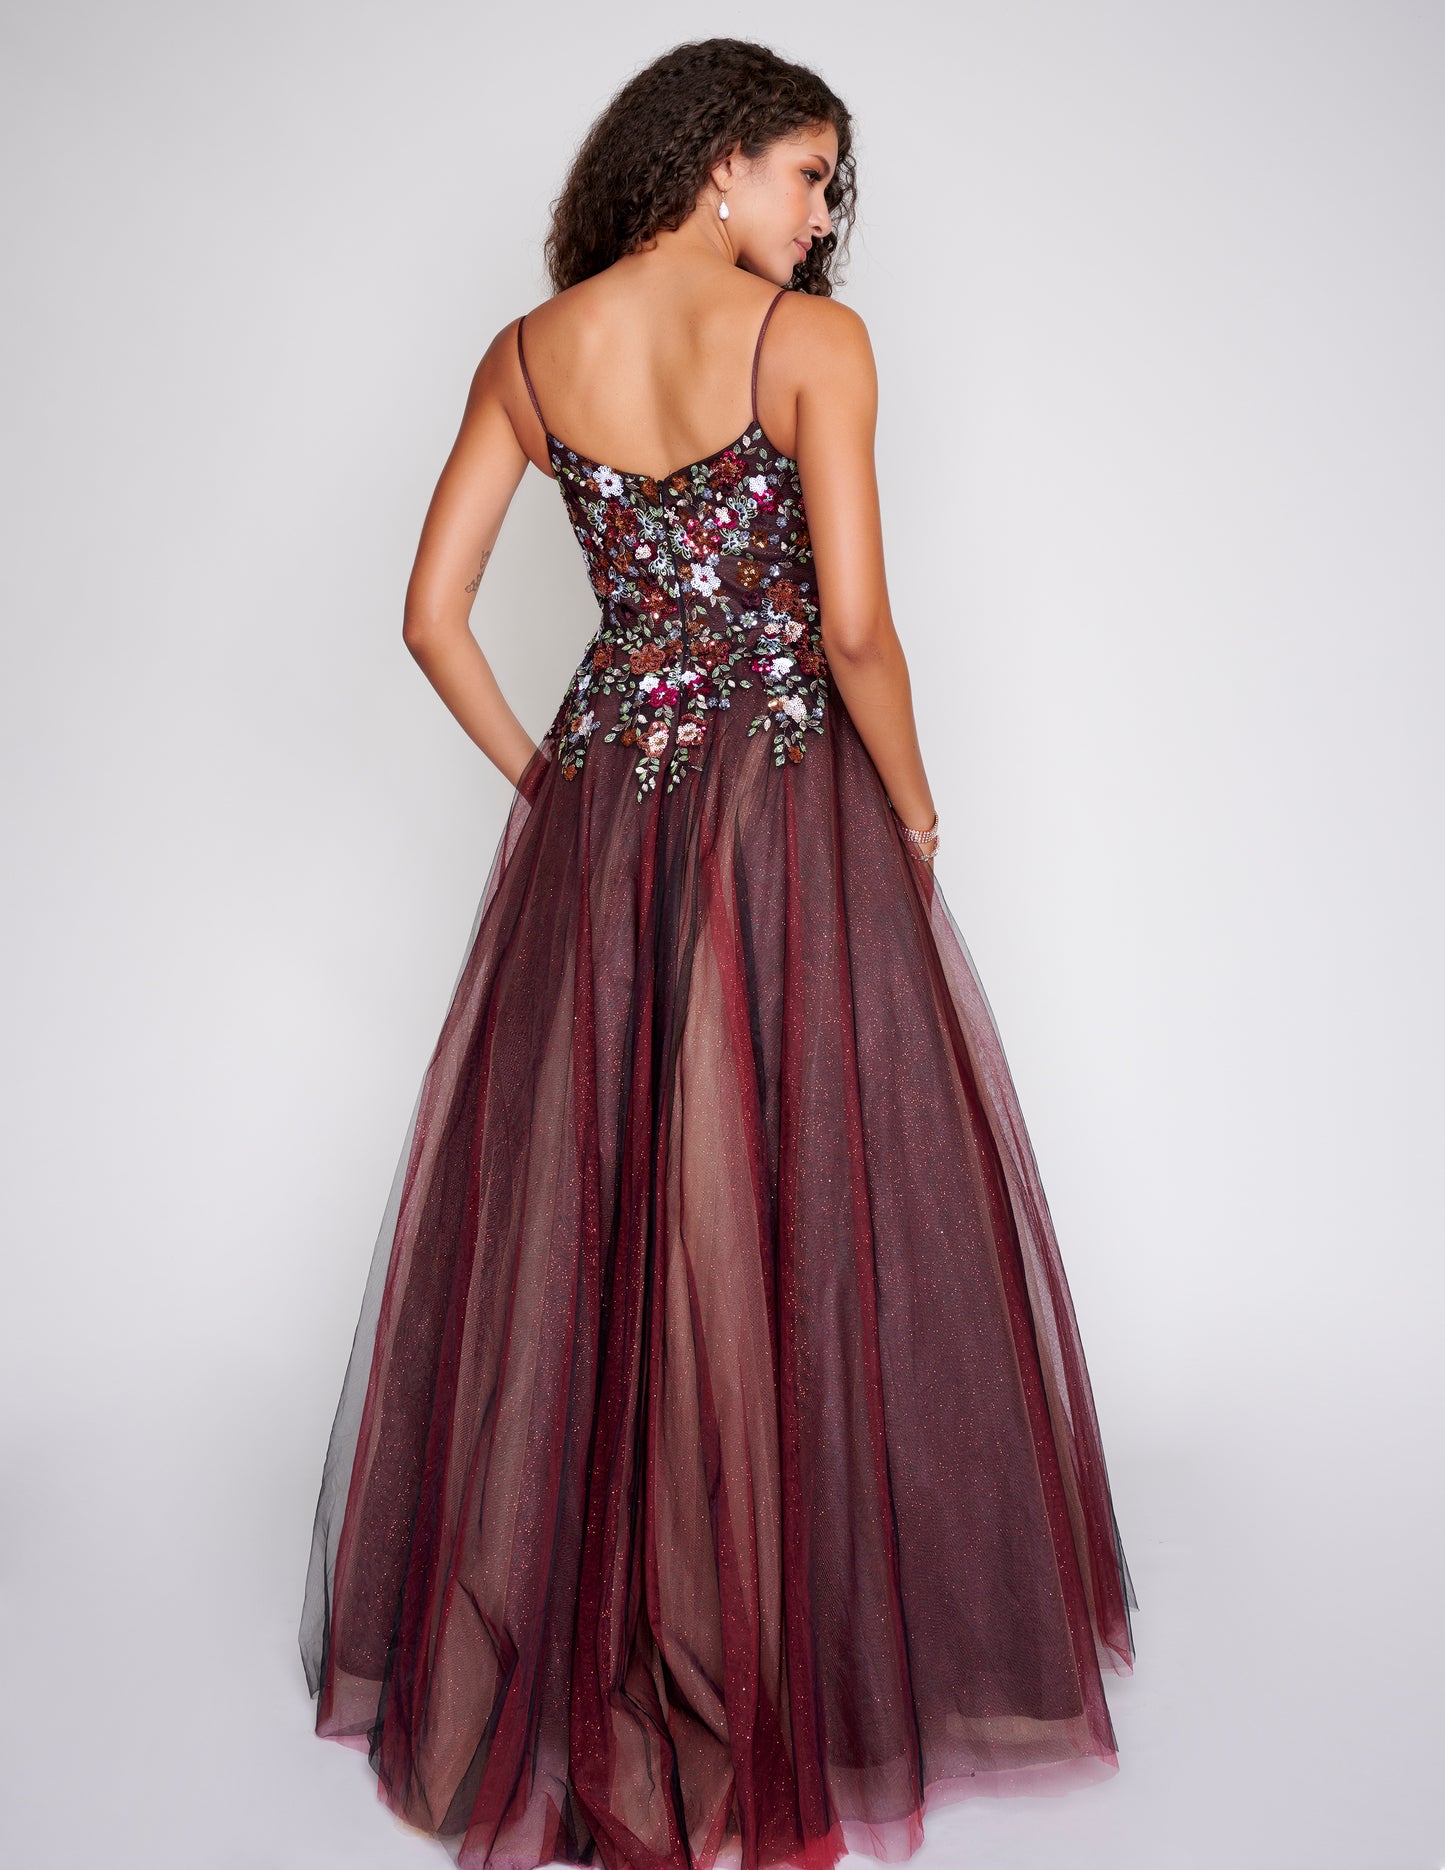 Nina Canacci 3206 Multi Colored Prom Dress Sequined Flower Top Tulle Ballgown Skirt  Colors:  Black Purple Multi, Black Red Multi